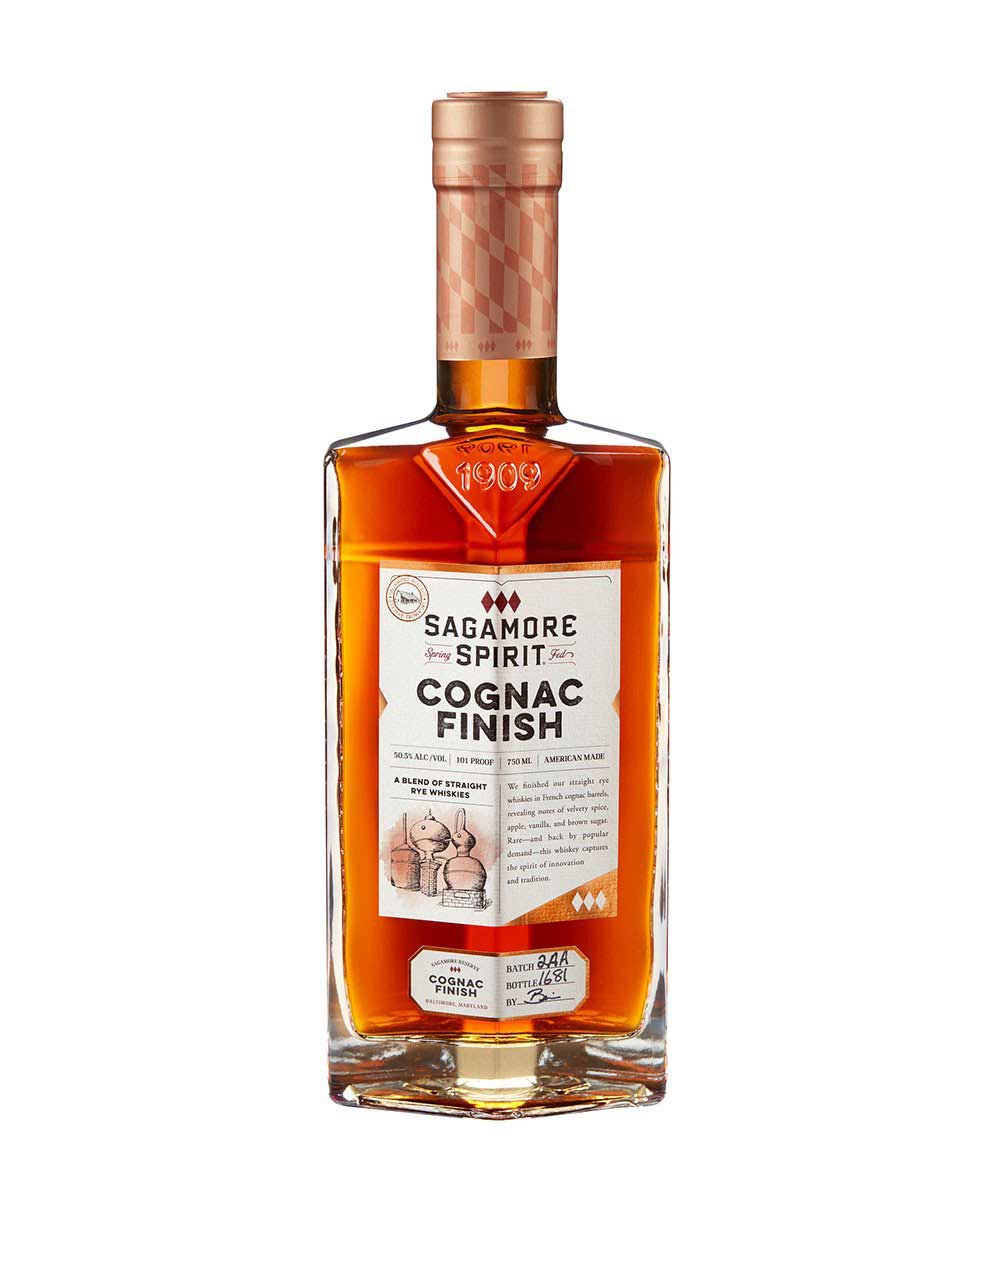 Sagamore Spirit Cognac Finish Rye Whiskey